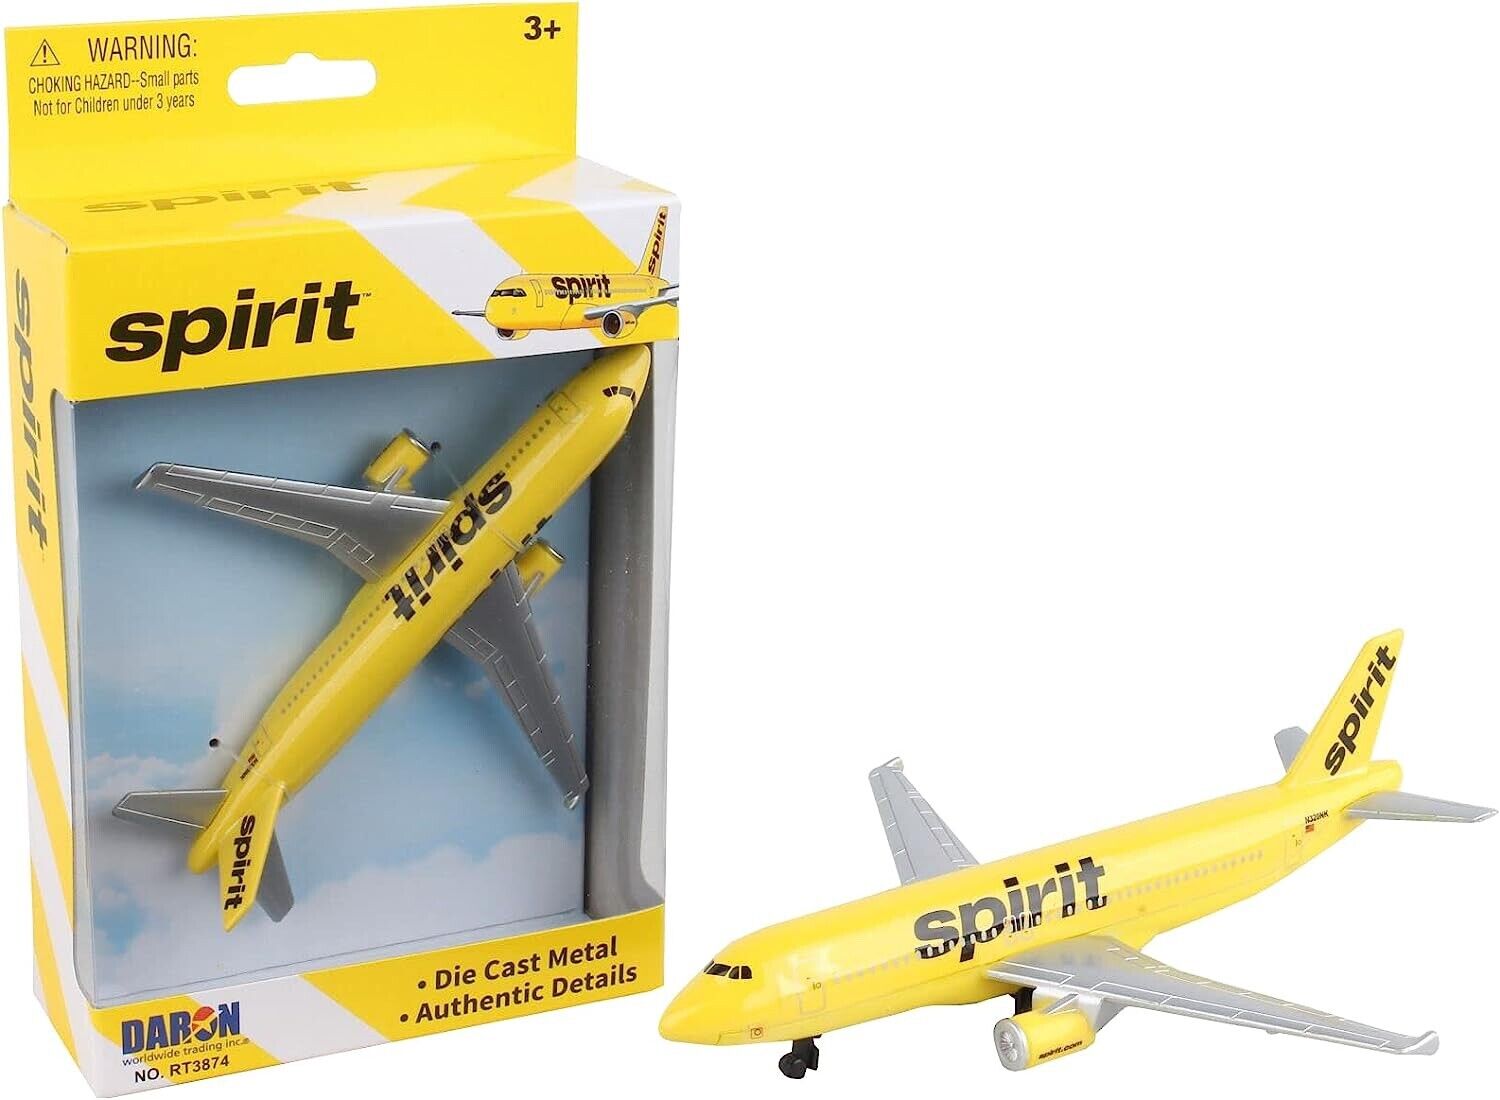 Daron Spirit Airlines Aircraft Single Plane Diecast Model # RT3874